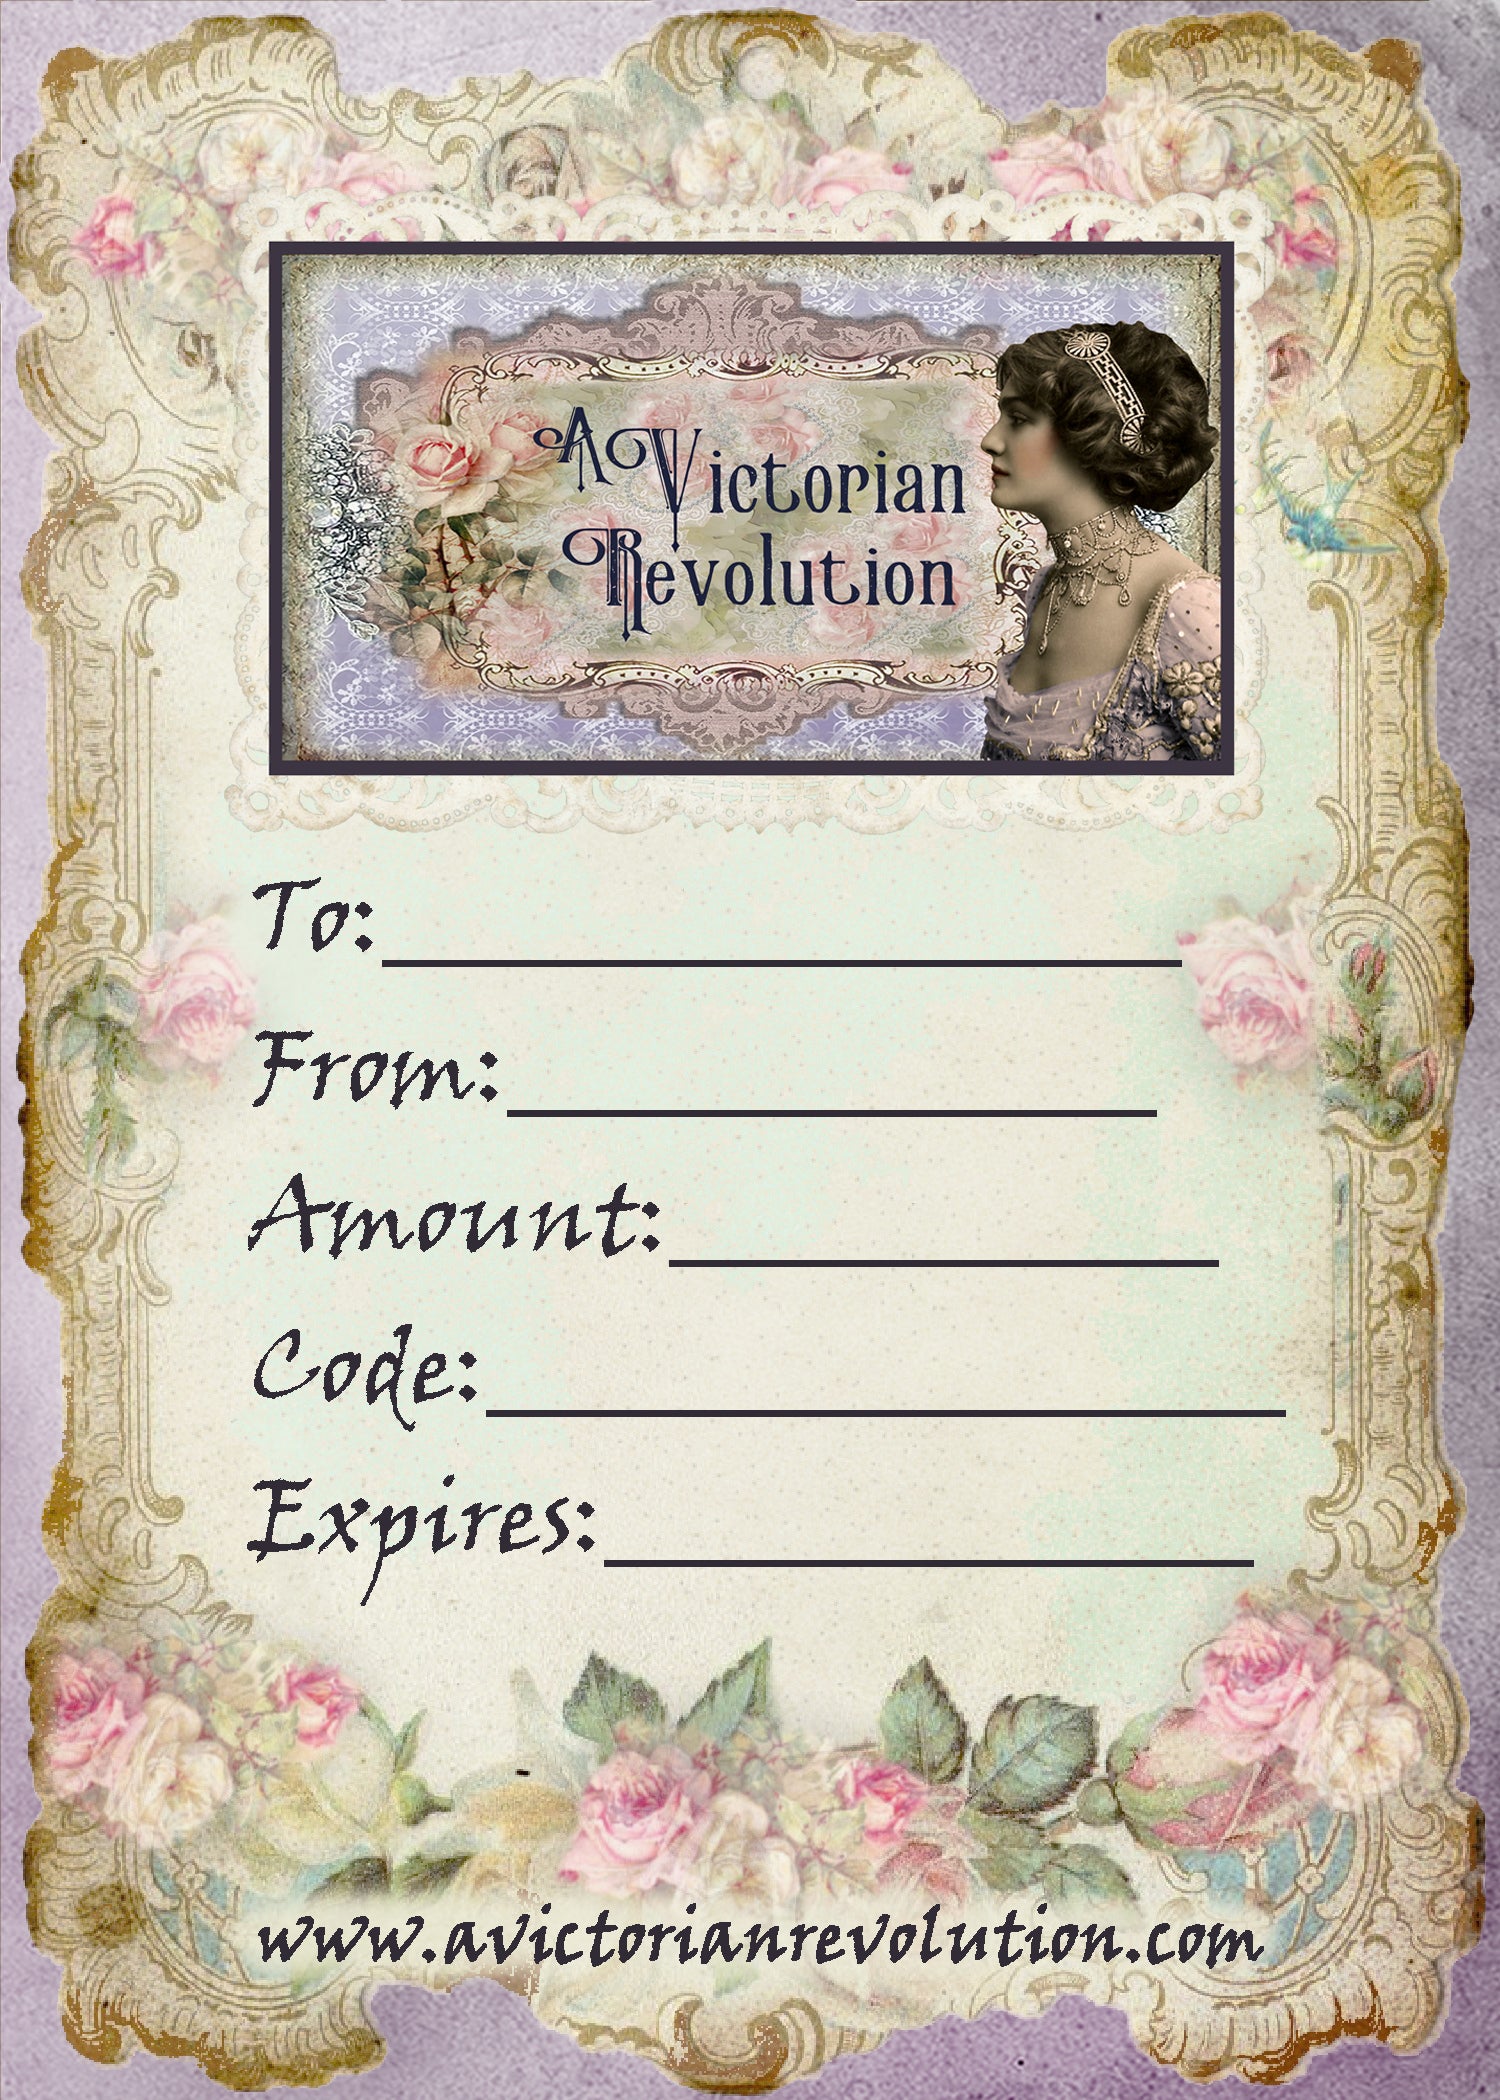 A Victorian Revolution Gift Certificate